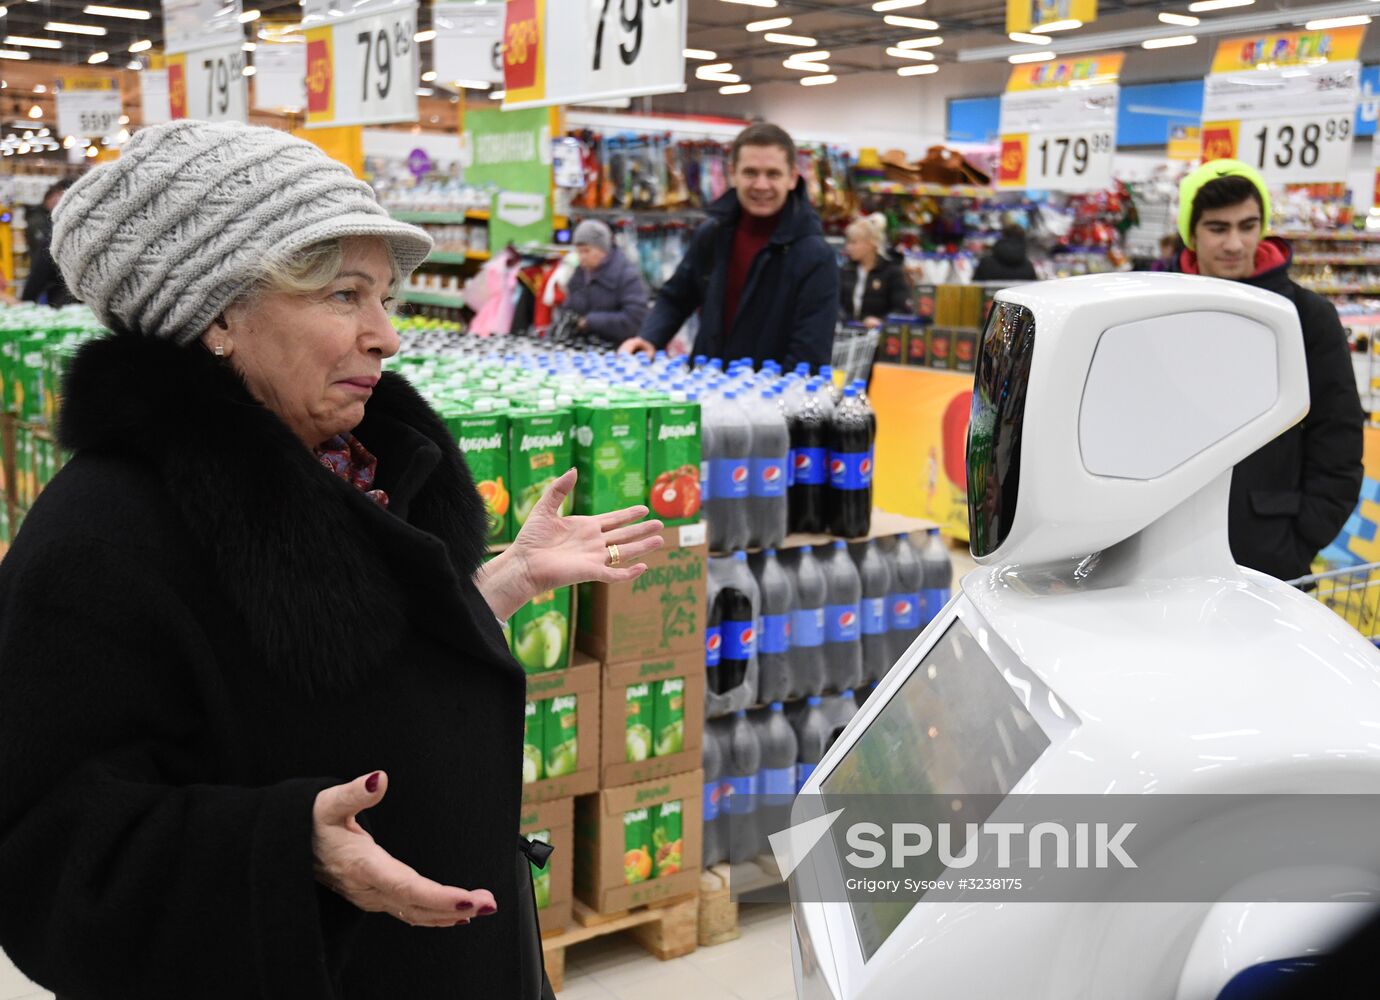 Consultant robots in Lenta supermarkets